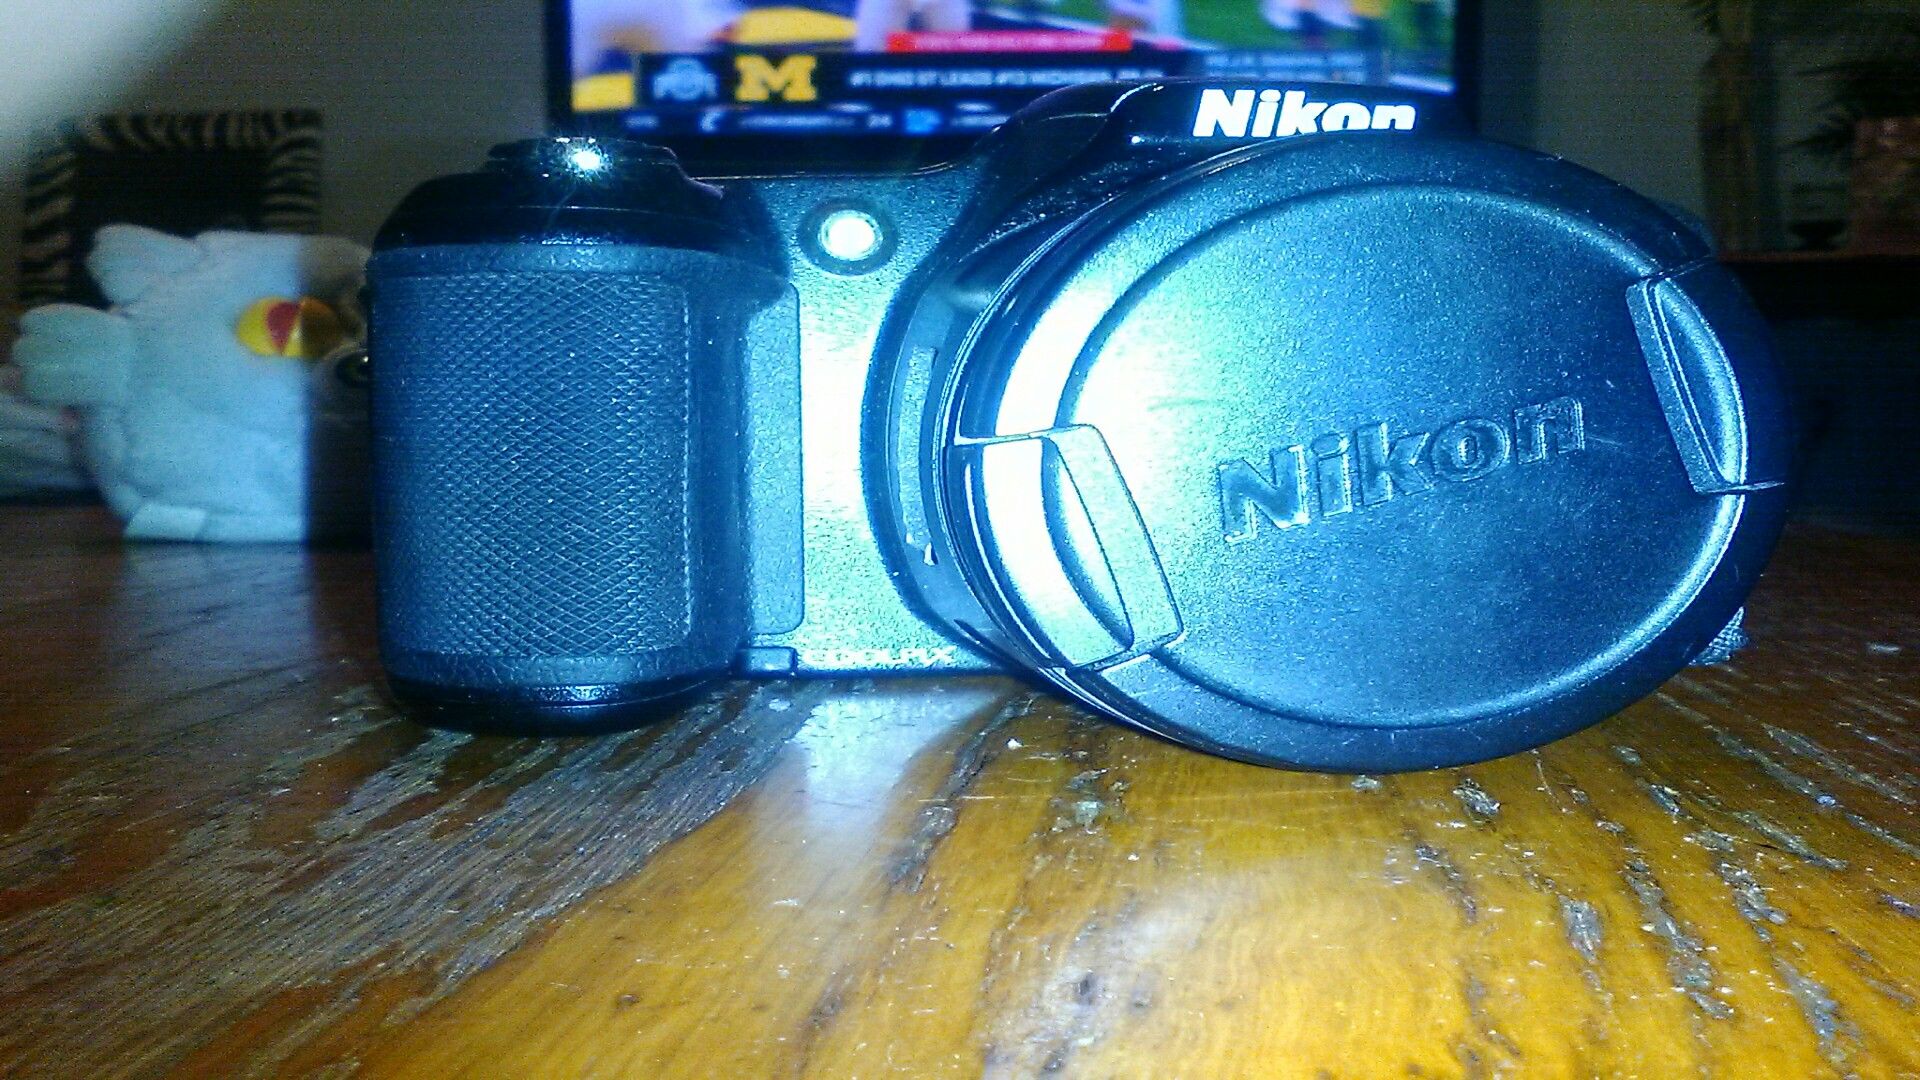 Nikon Digital camera